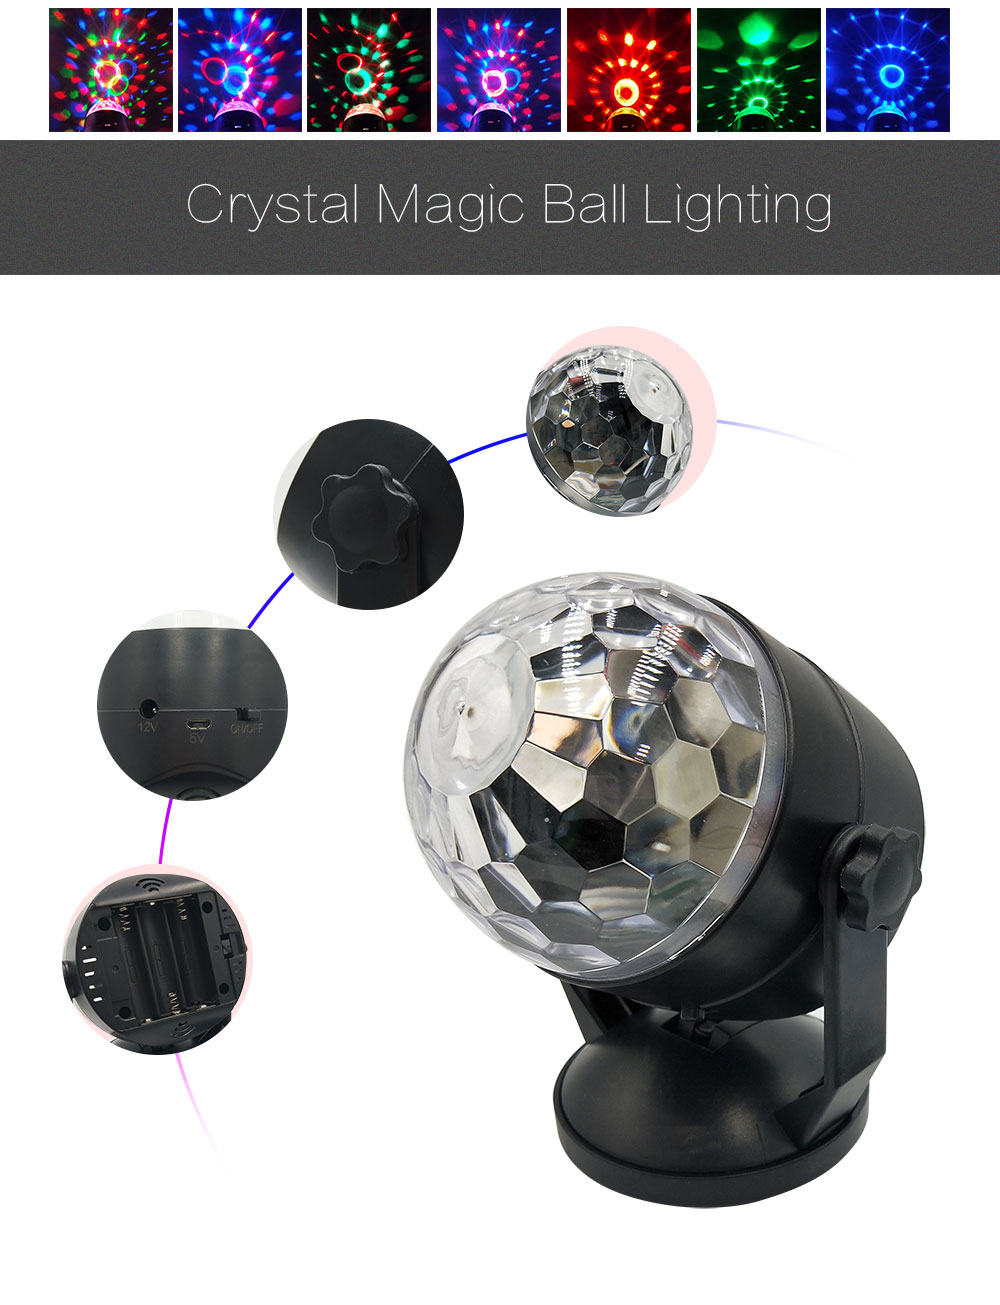 BRELONG Crystal Magic Ball Stage Lights KTV Bar Night Light Atmosphere